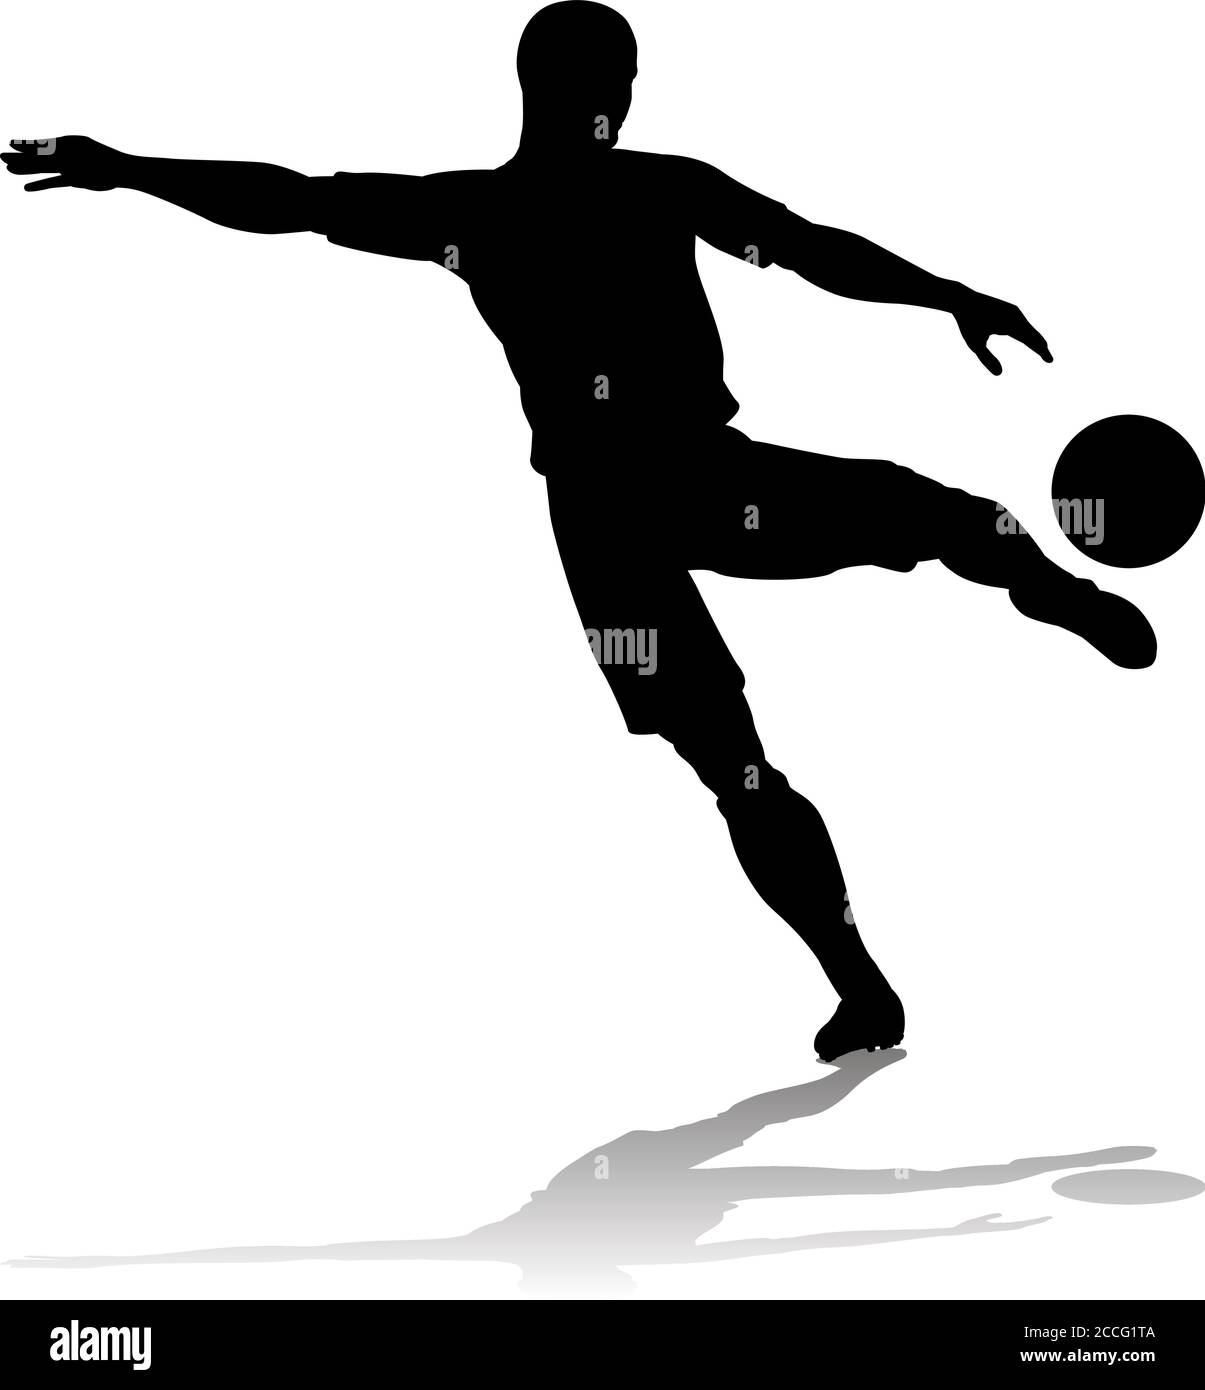 Football Soccer Player Silhouette Illustration de Vecteur